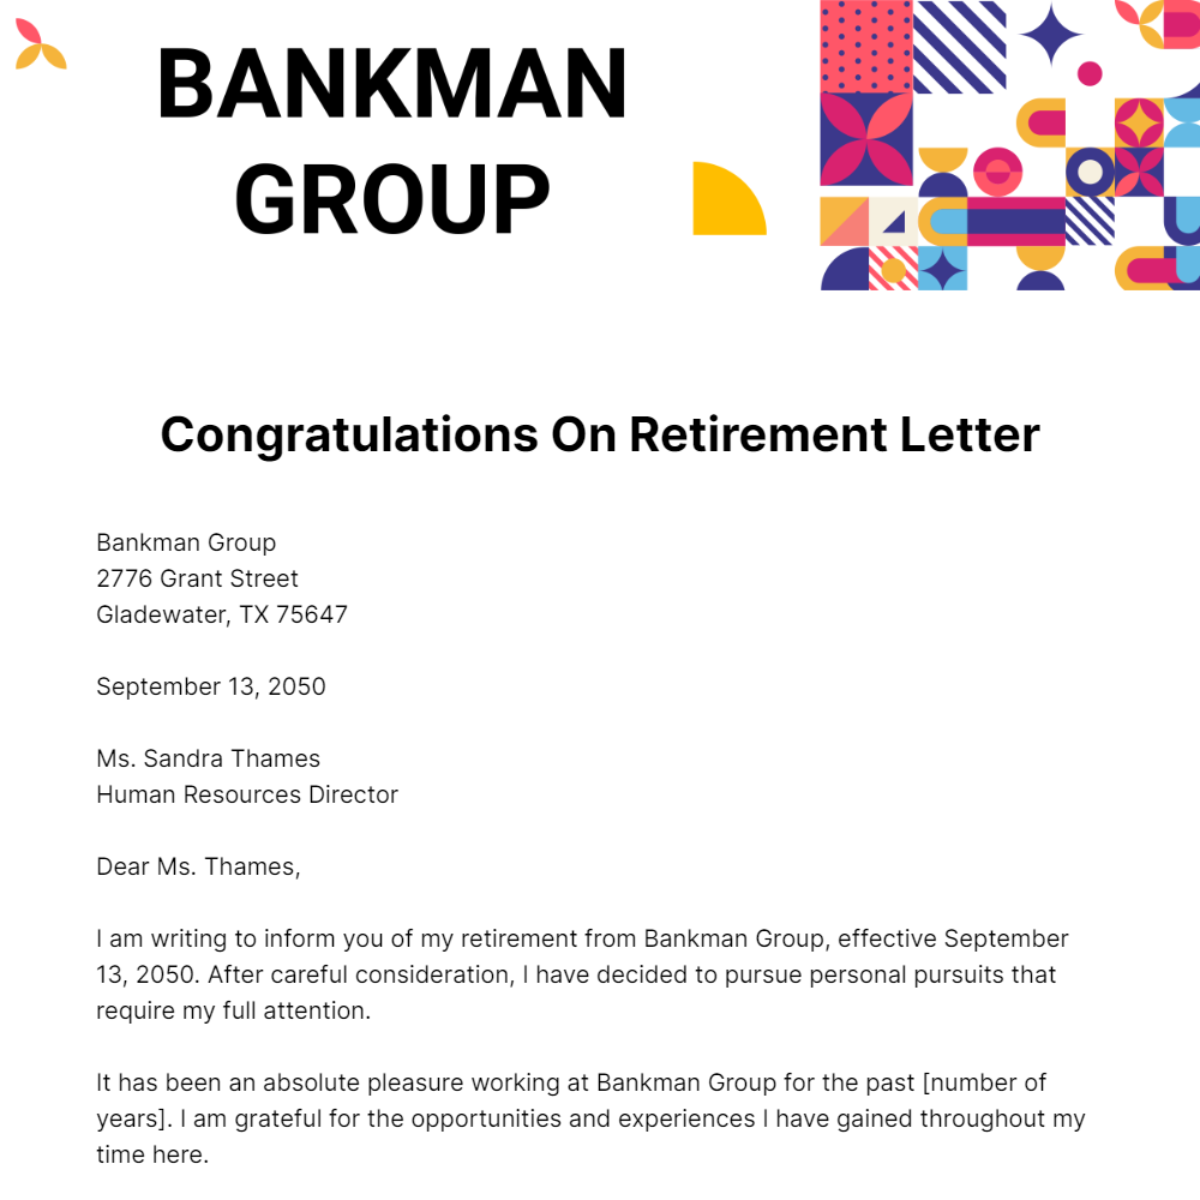 Congratulations on Retirement Letter Template